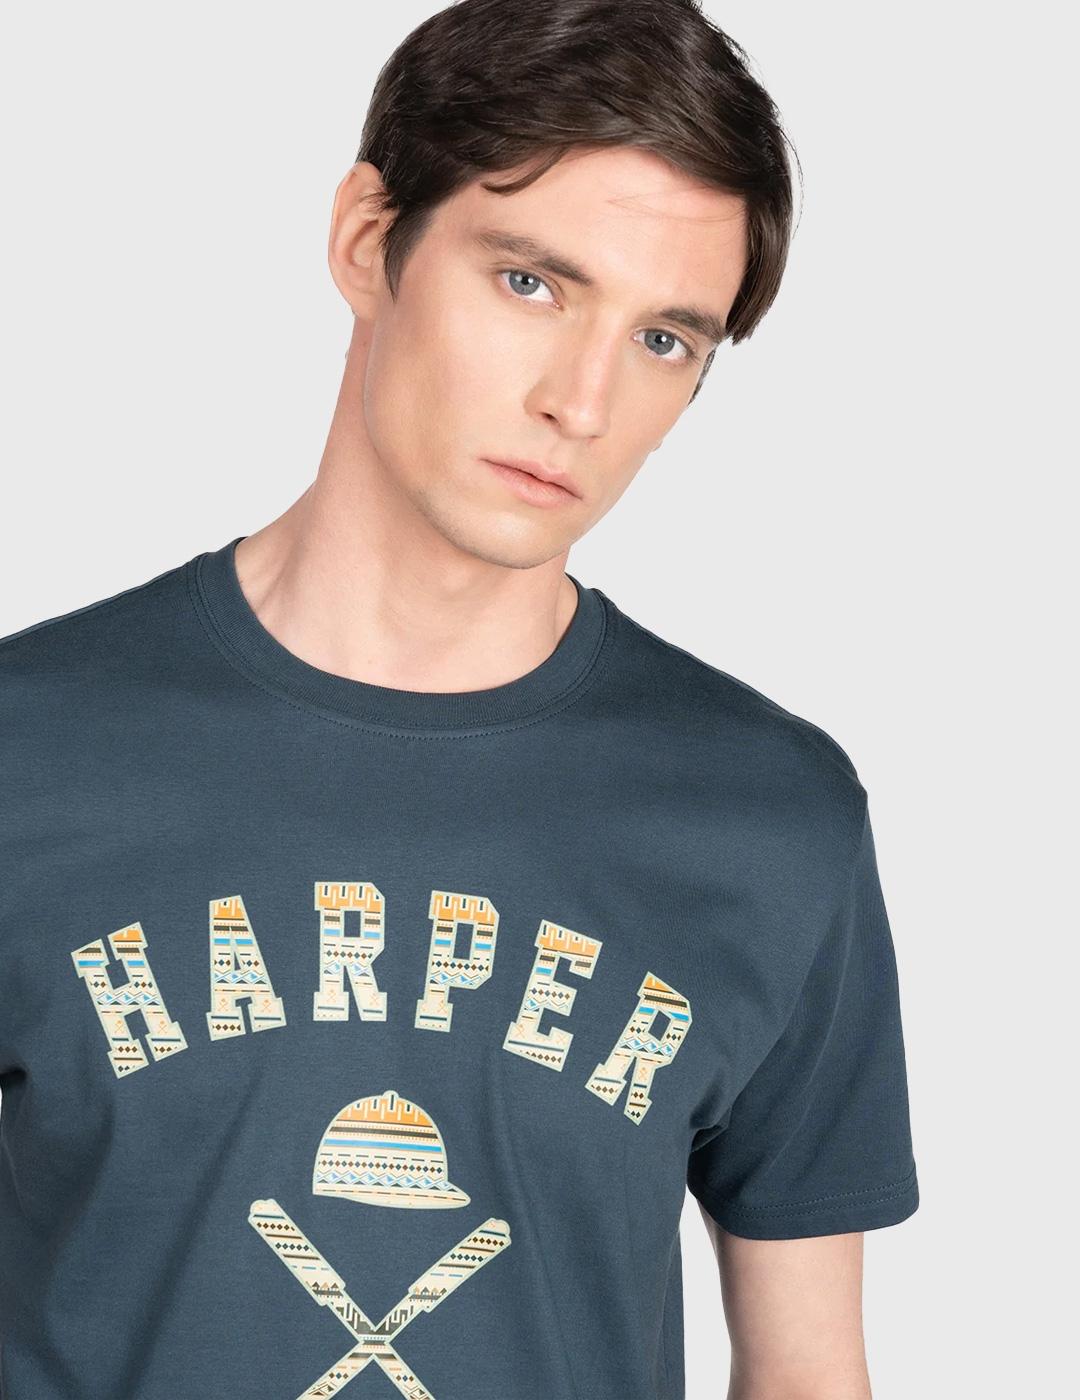 Harper & Neyer Camiseta Ethnic azul marino para hombre